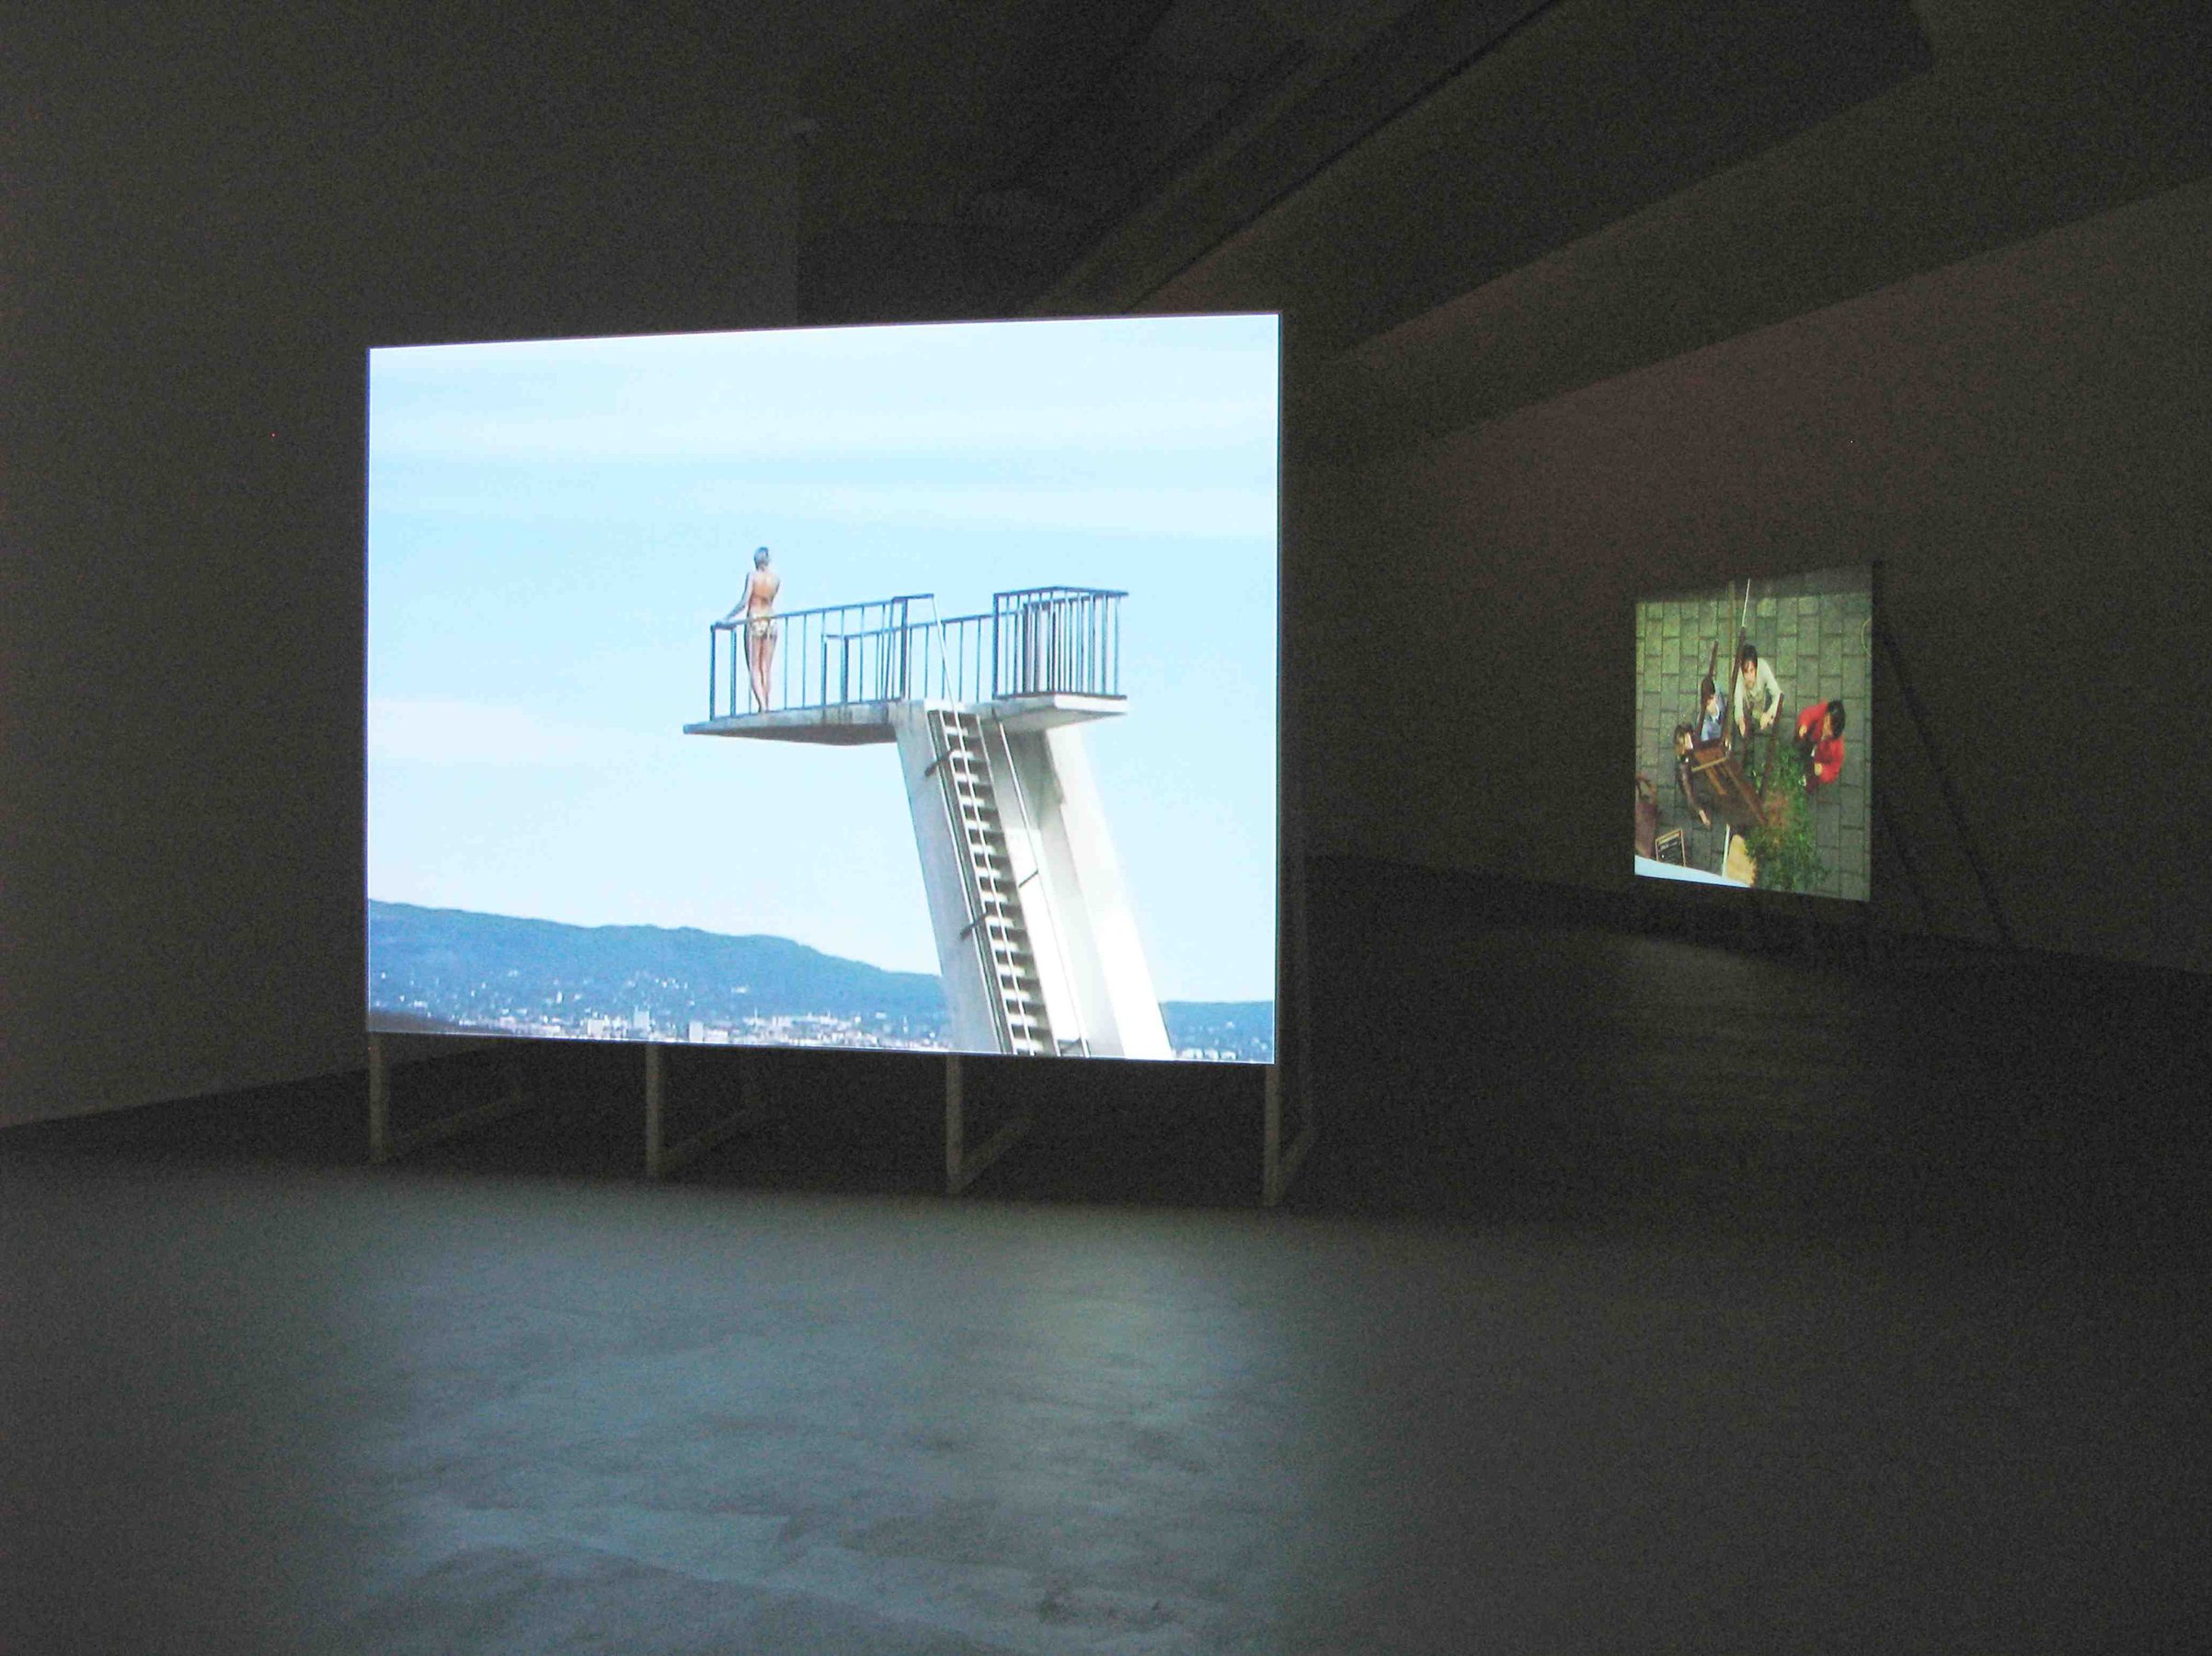 Where She is at, 2001, DV, 07’35'', loop, installation view, Museum für Gegenwartskunst, Basel, 2007